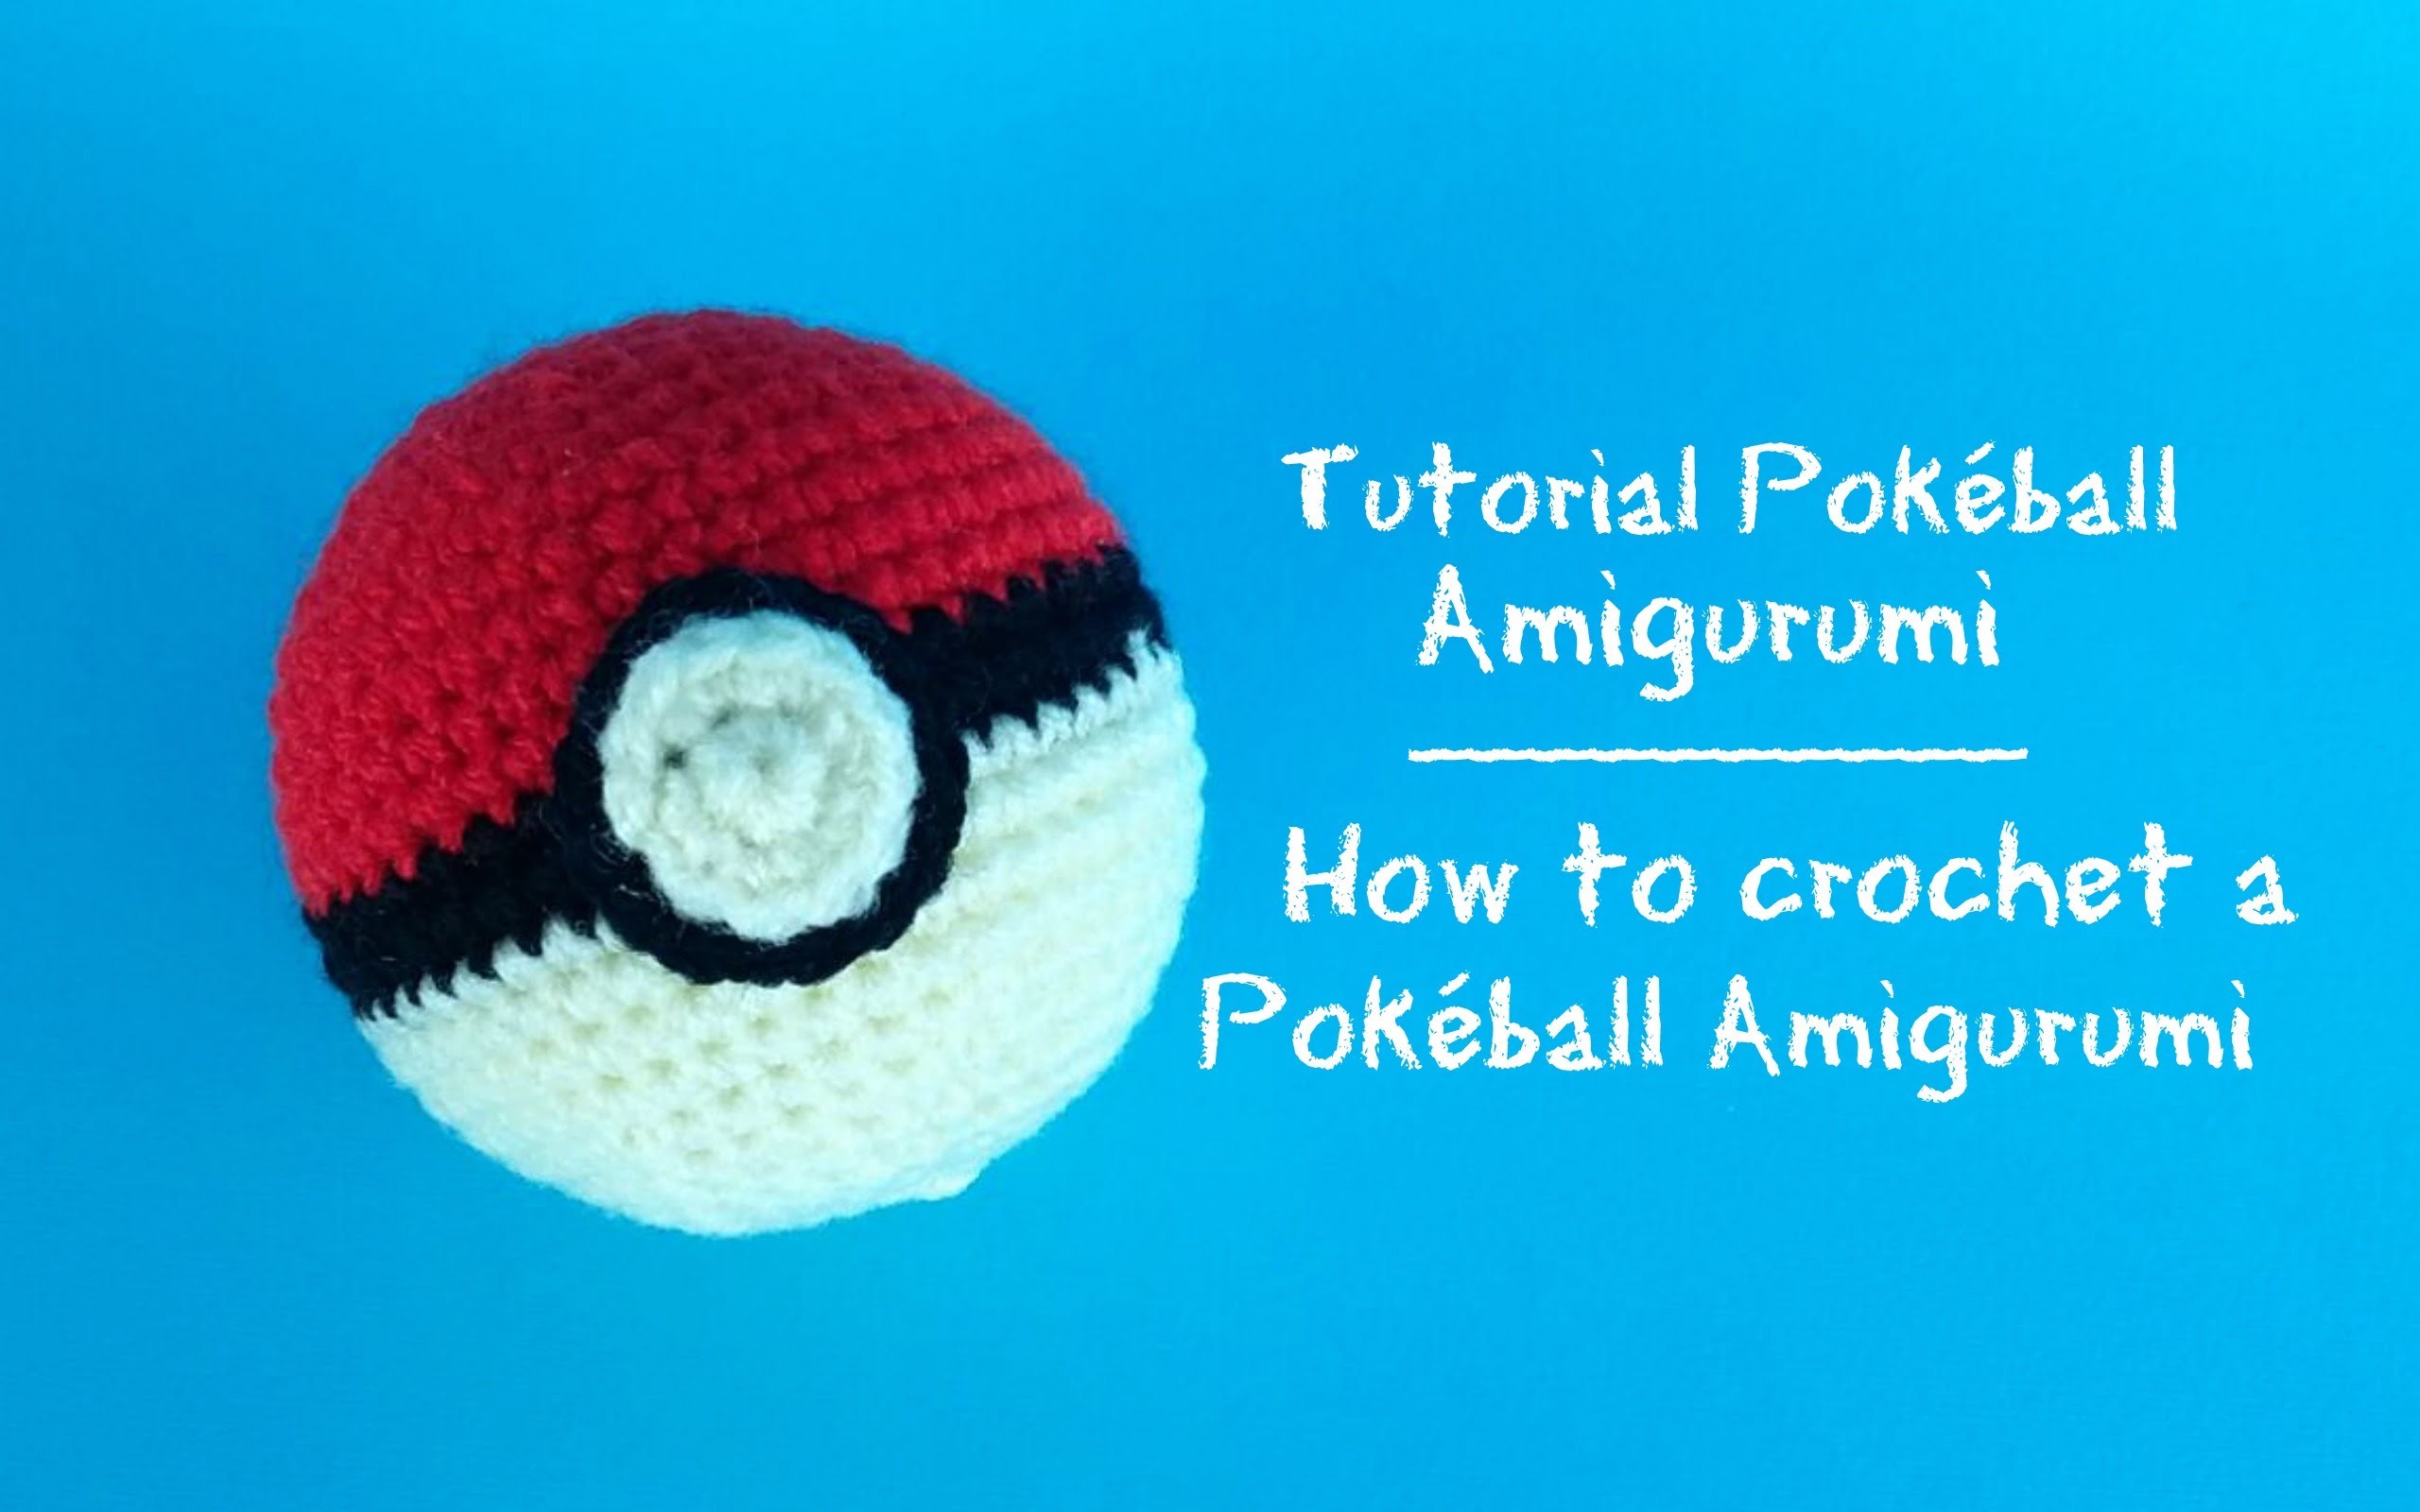 PokéBall Amigurumi | How to crochet a PokéBall Amigurumi